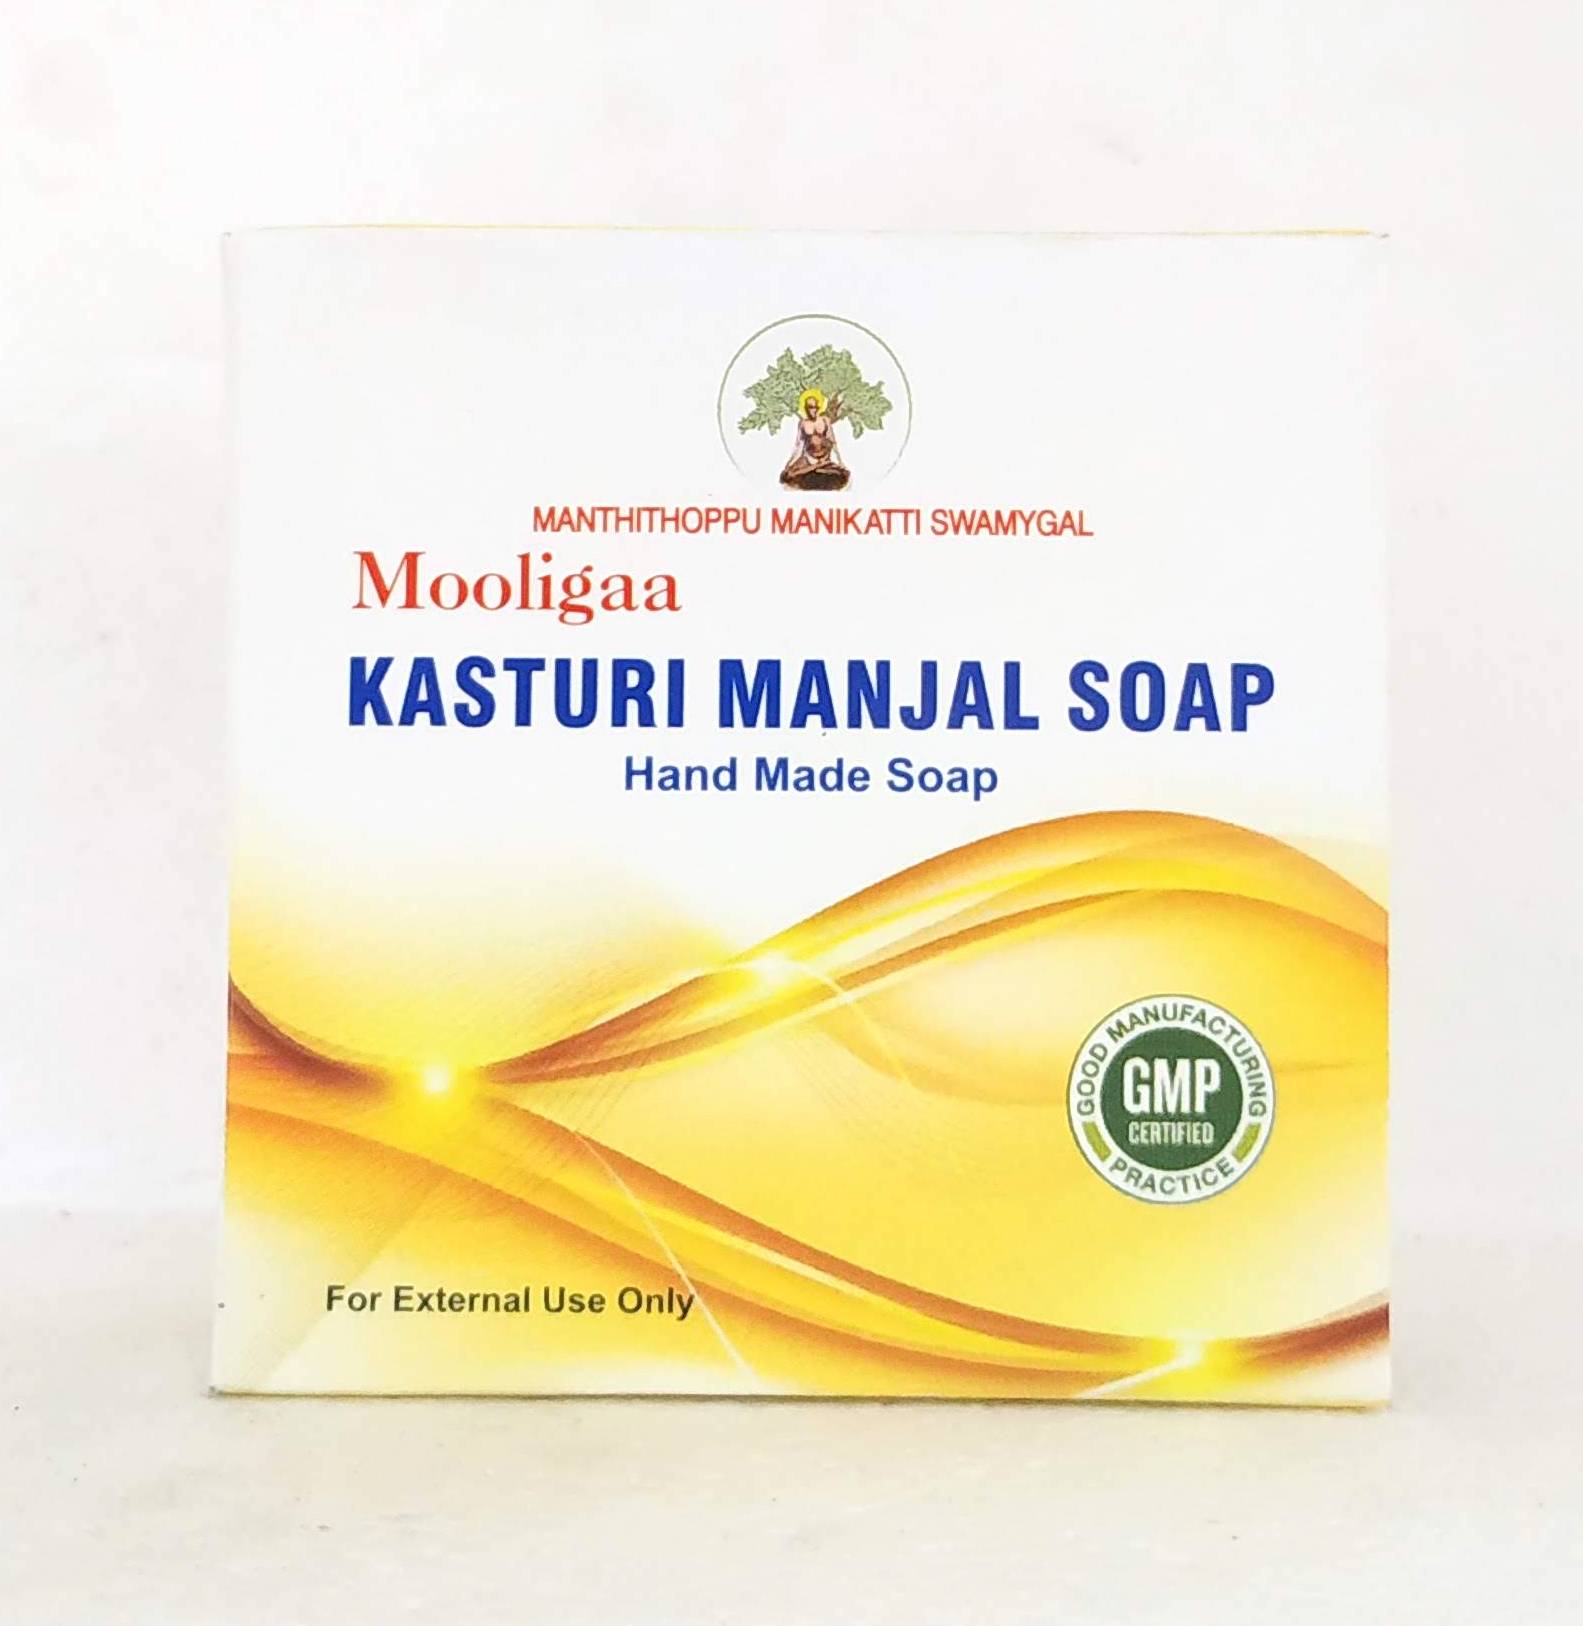 Shop Mooliga kasthuri manjal soap 75gm at price 45.00 from Manthithoppu Online - Ayush Care